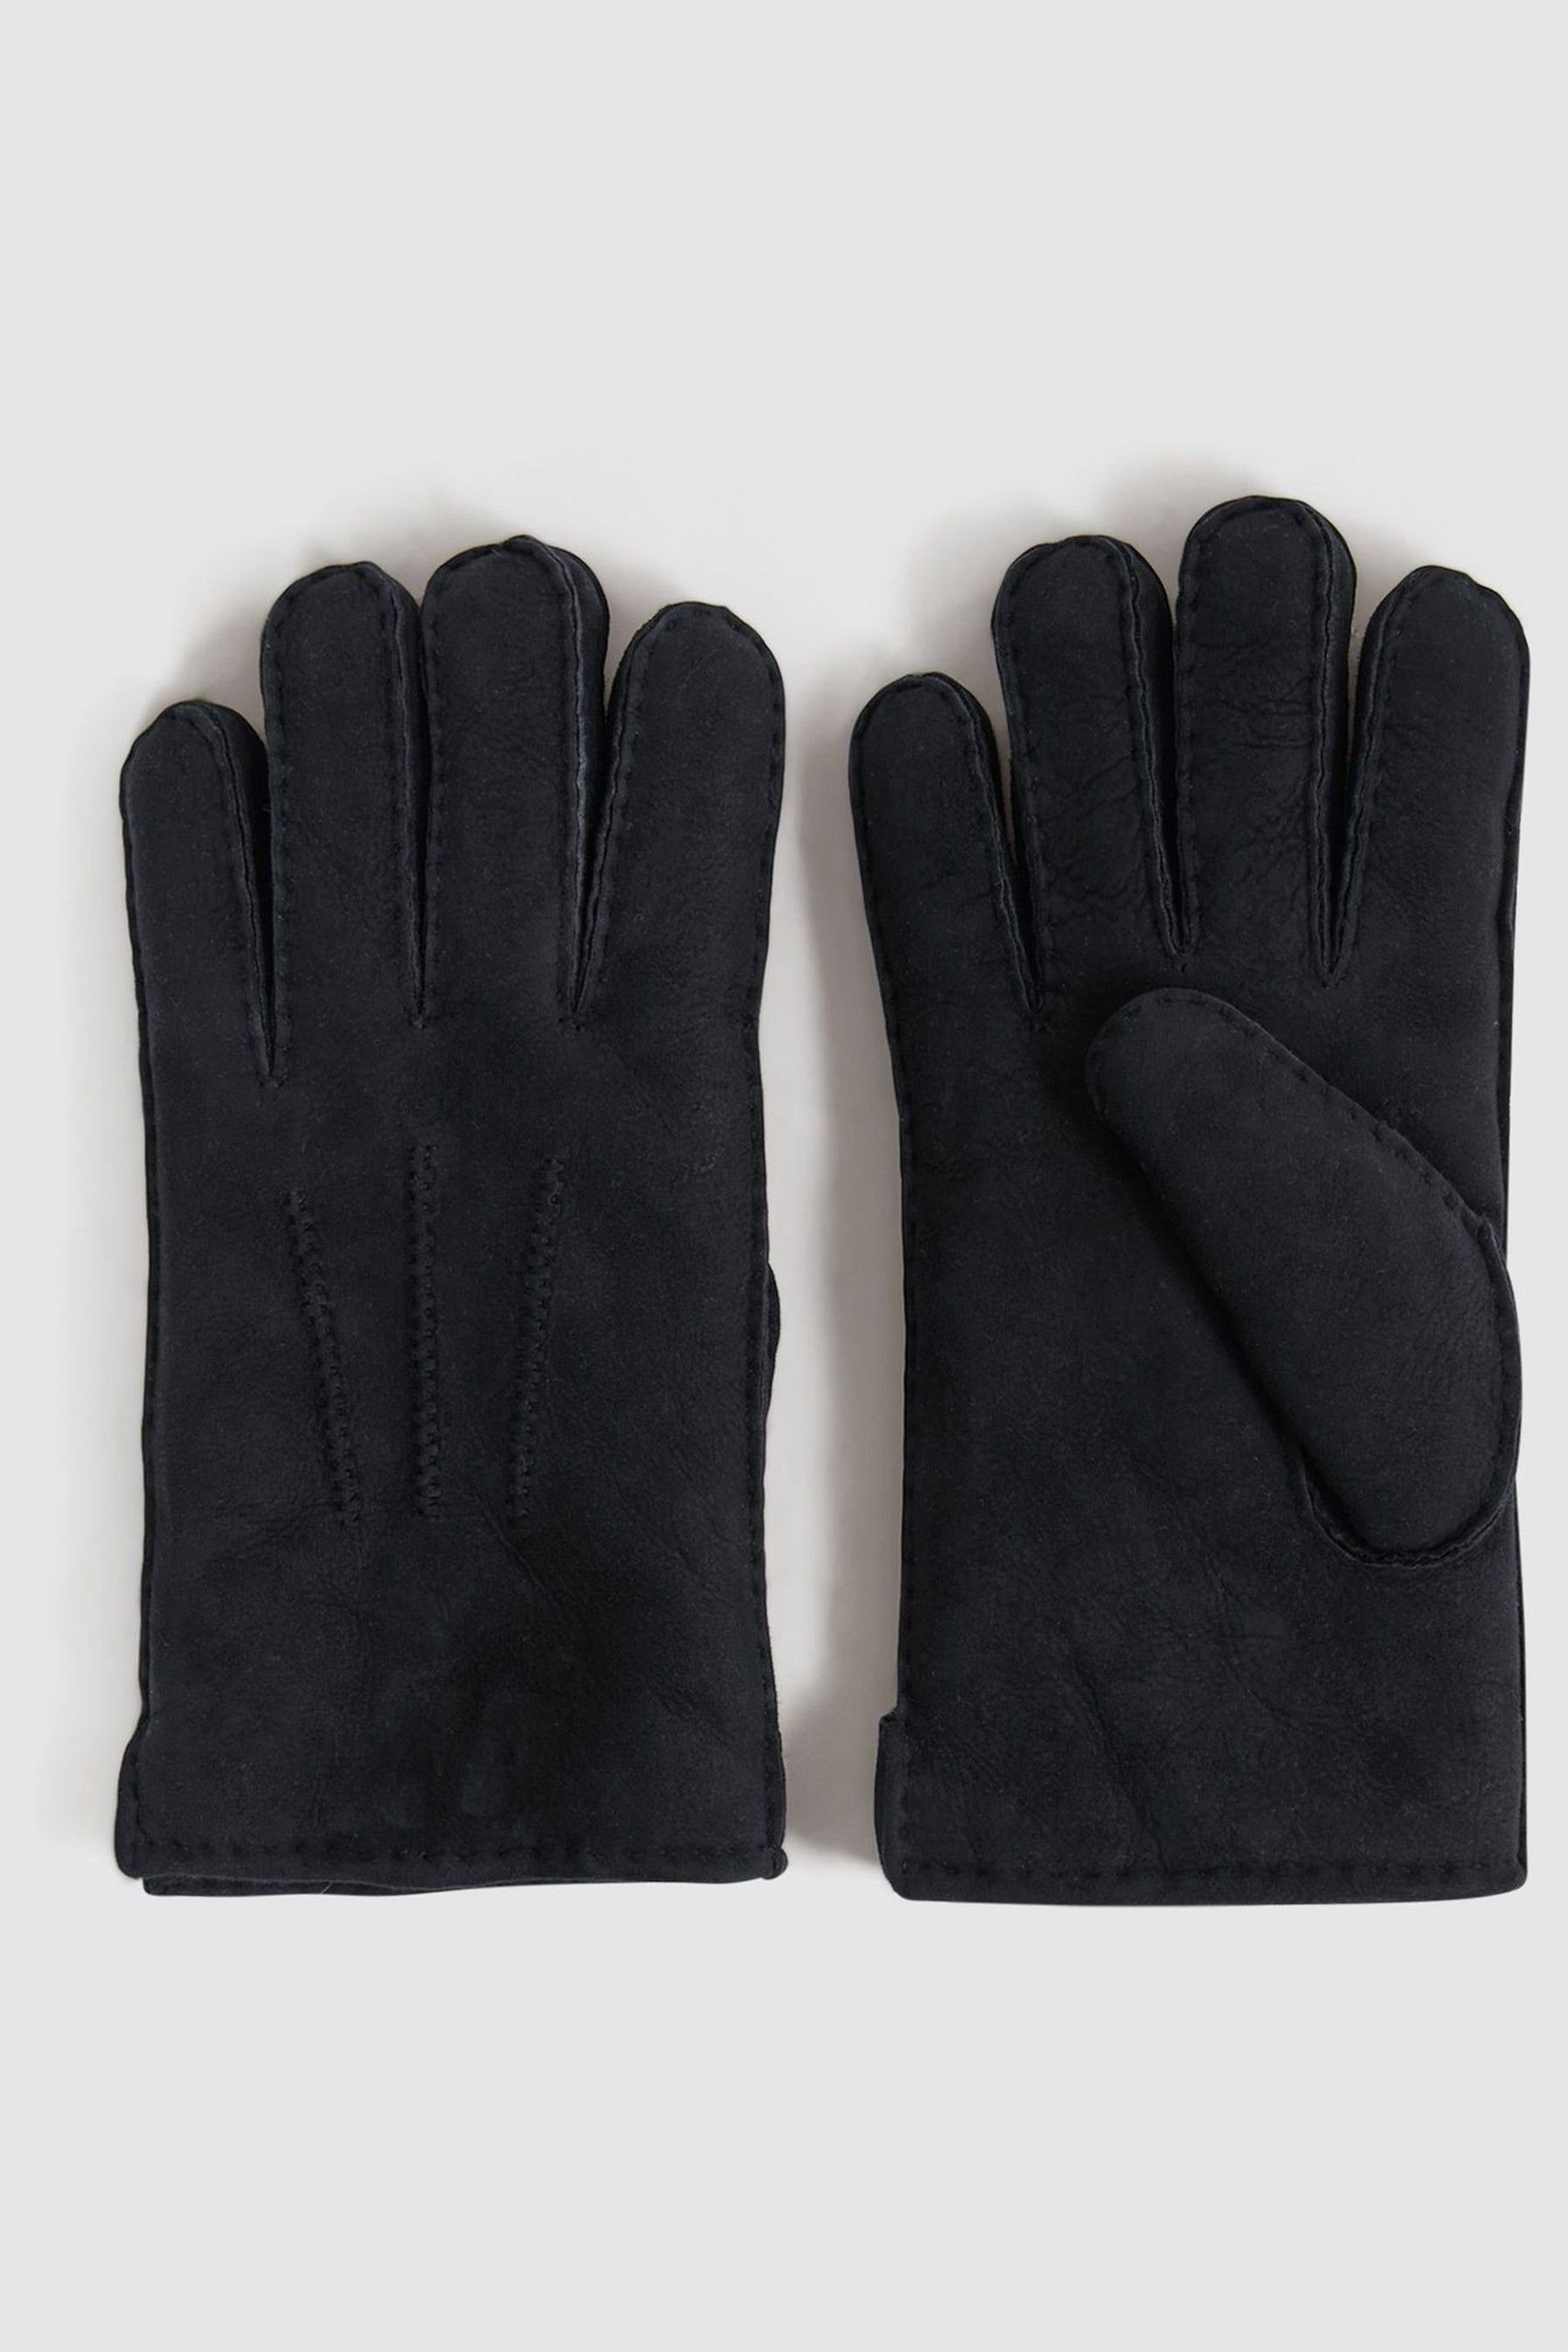 Reiss Aragon - Black Suede Shearling Gloves, M